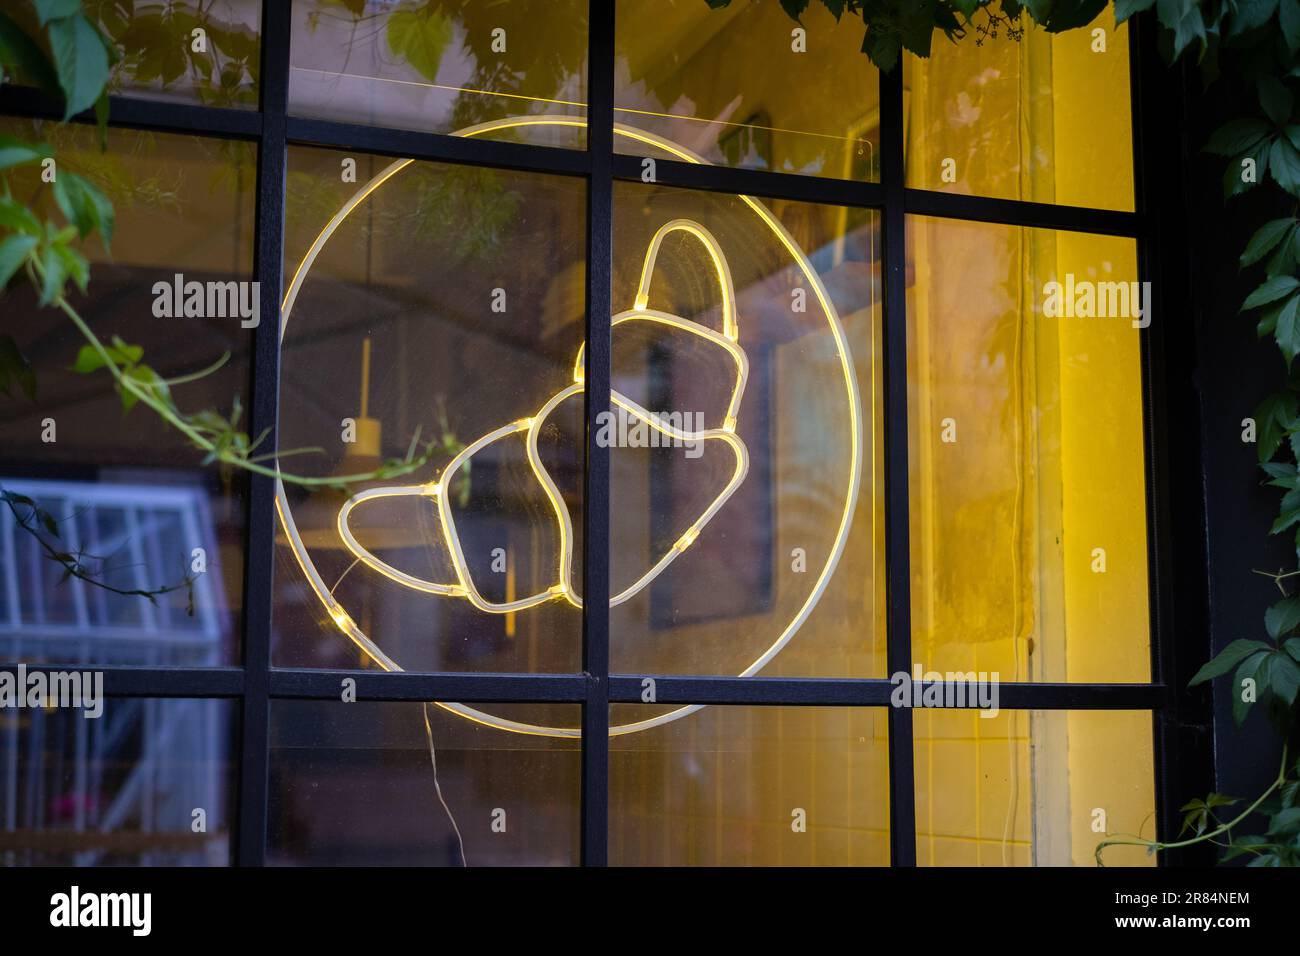 Croissant neon light sign hanging on café window. Stock Photo